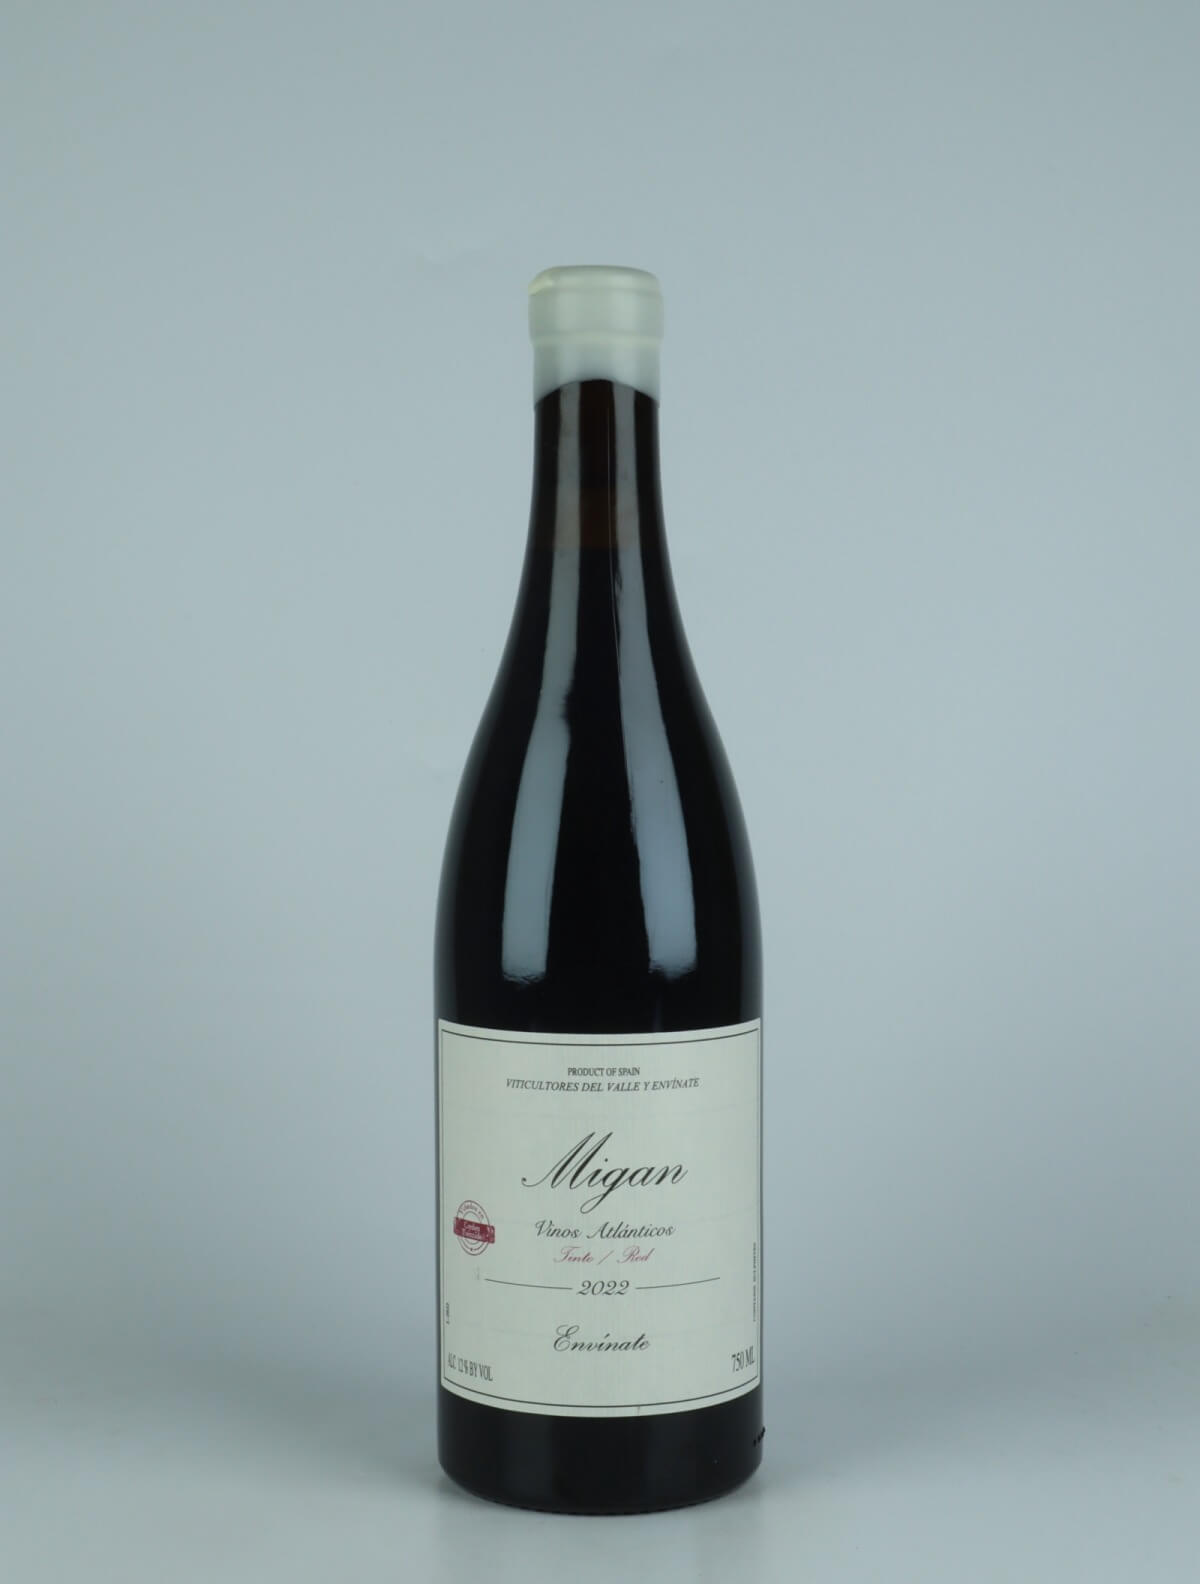 A bottle 2022 Migan - Tenerife Red wine from Envínate,  in Spain